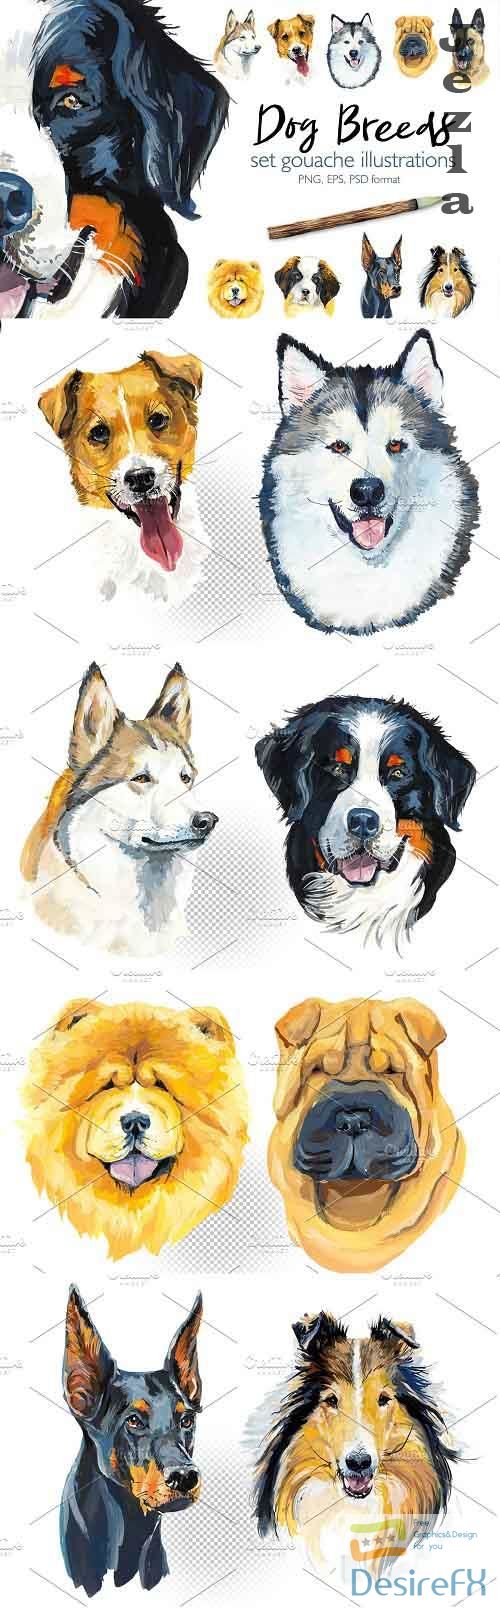 Dog breeds - 3716953